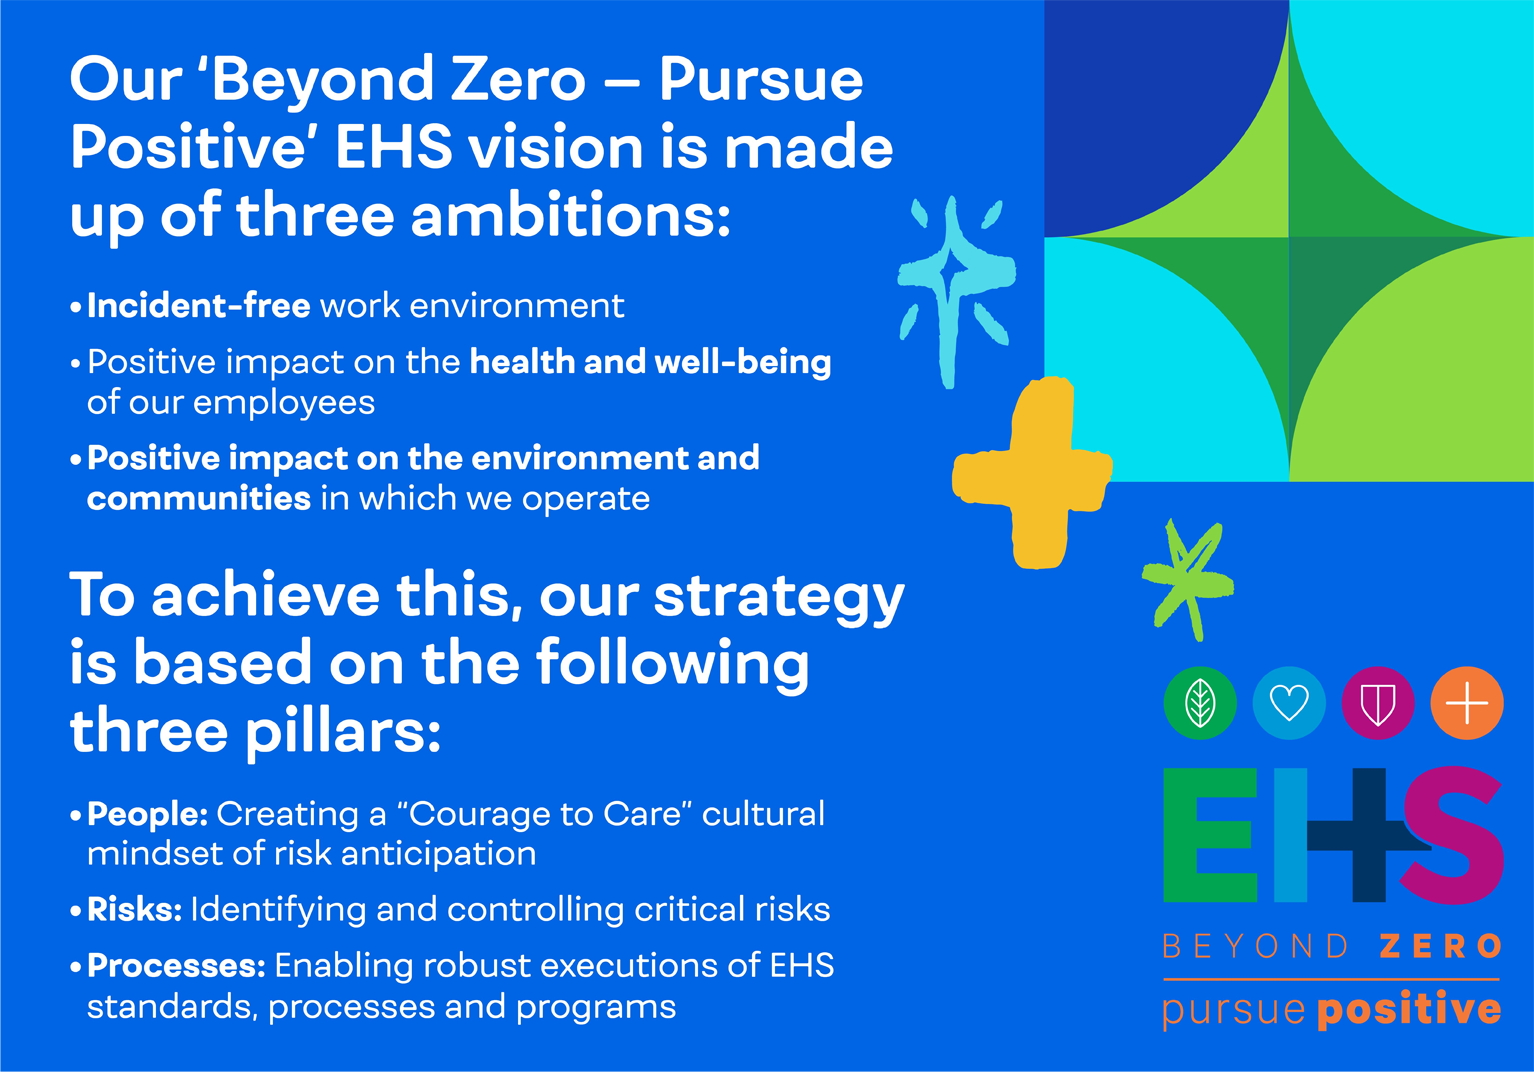 Our ‘Beyond Zero – Pursue Positive’ EHS vision and pillars